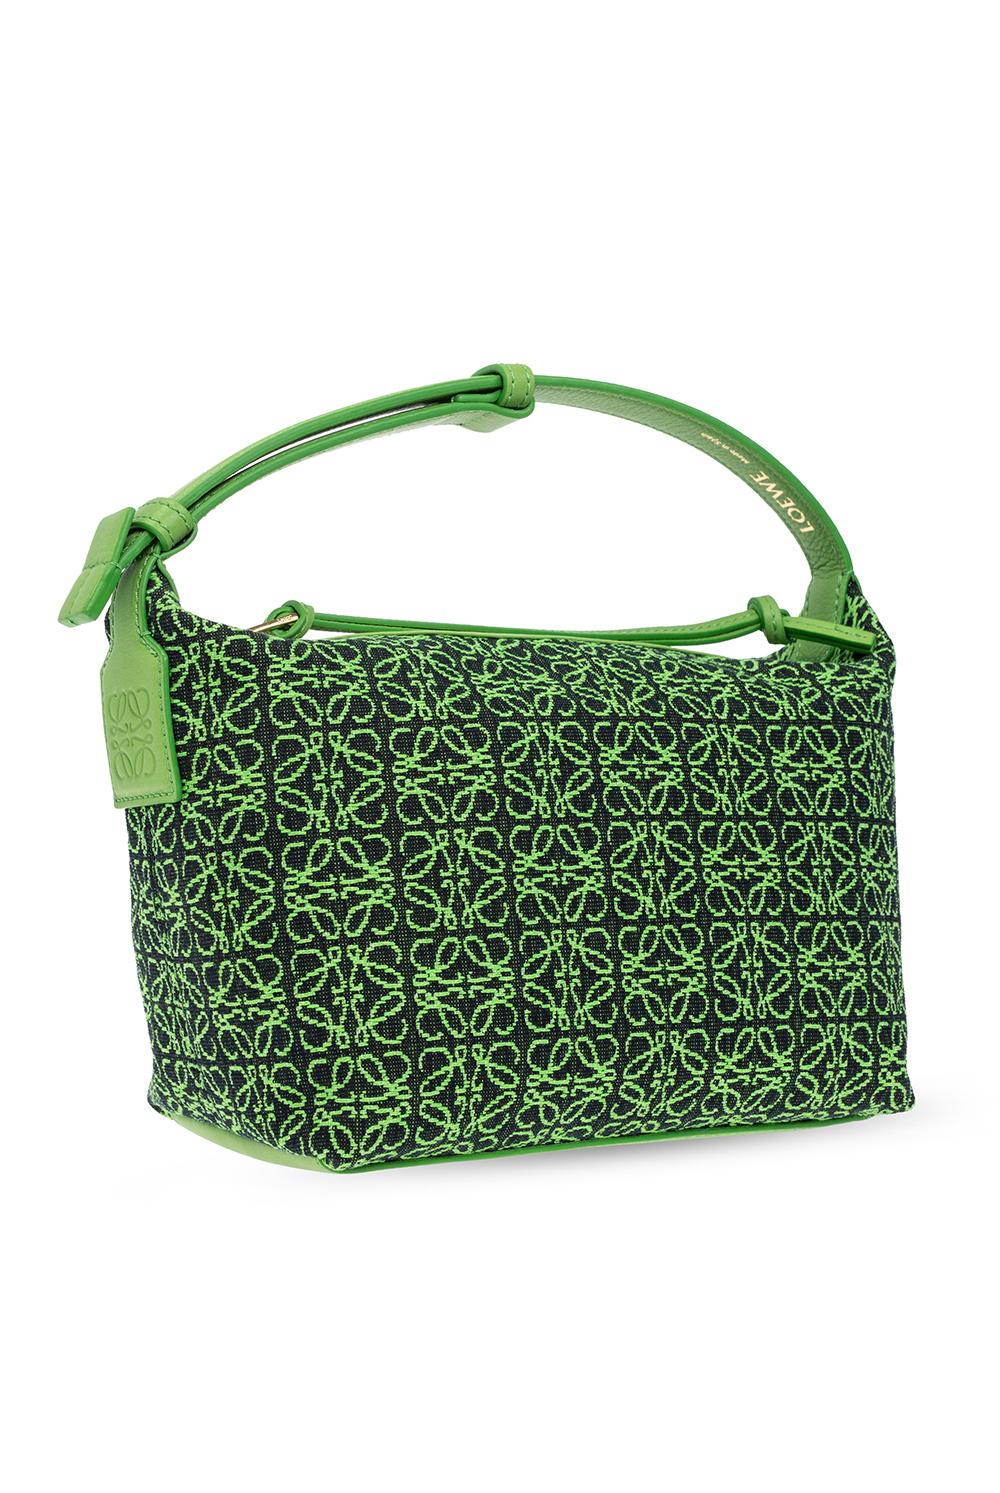 Loewe Canvas 'cubi Small' Shoulder Bag in Green - Lyst